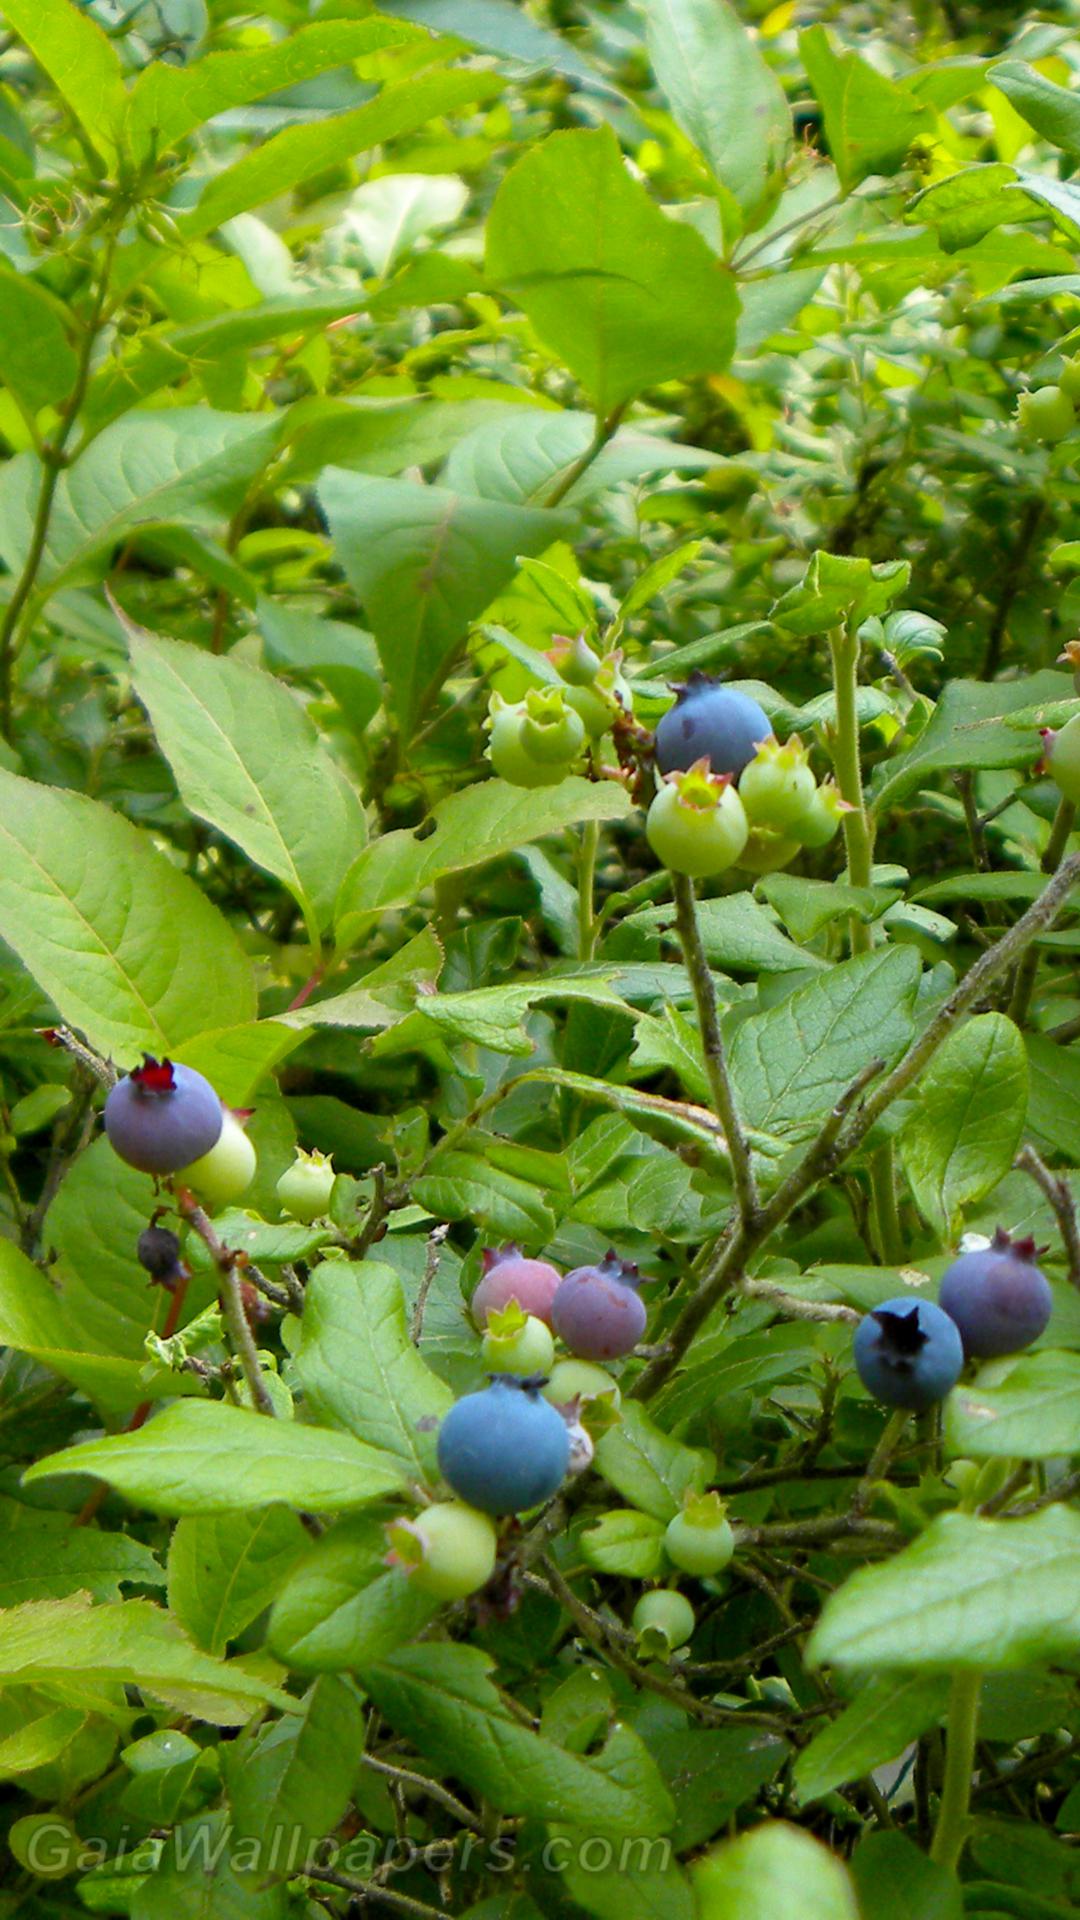 Lowbush blueberries in the nature - Free desktop wallpapers